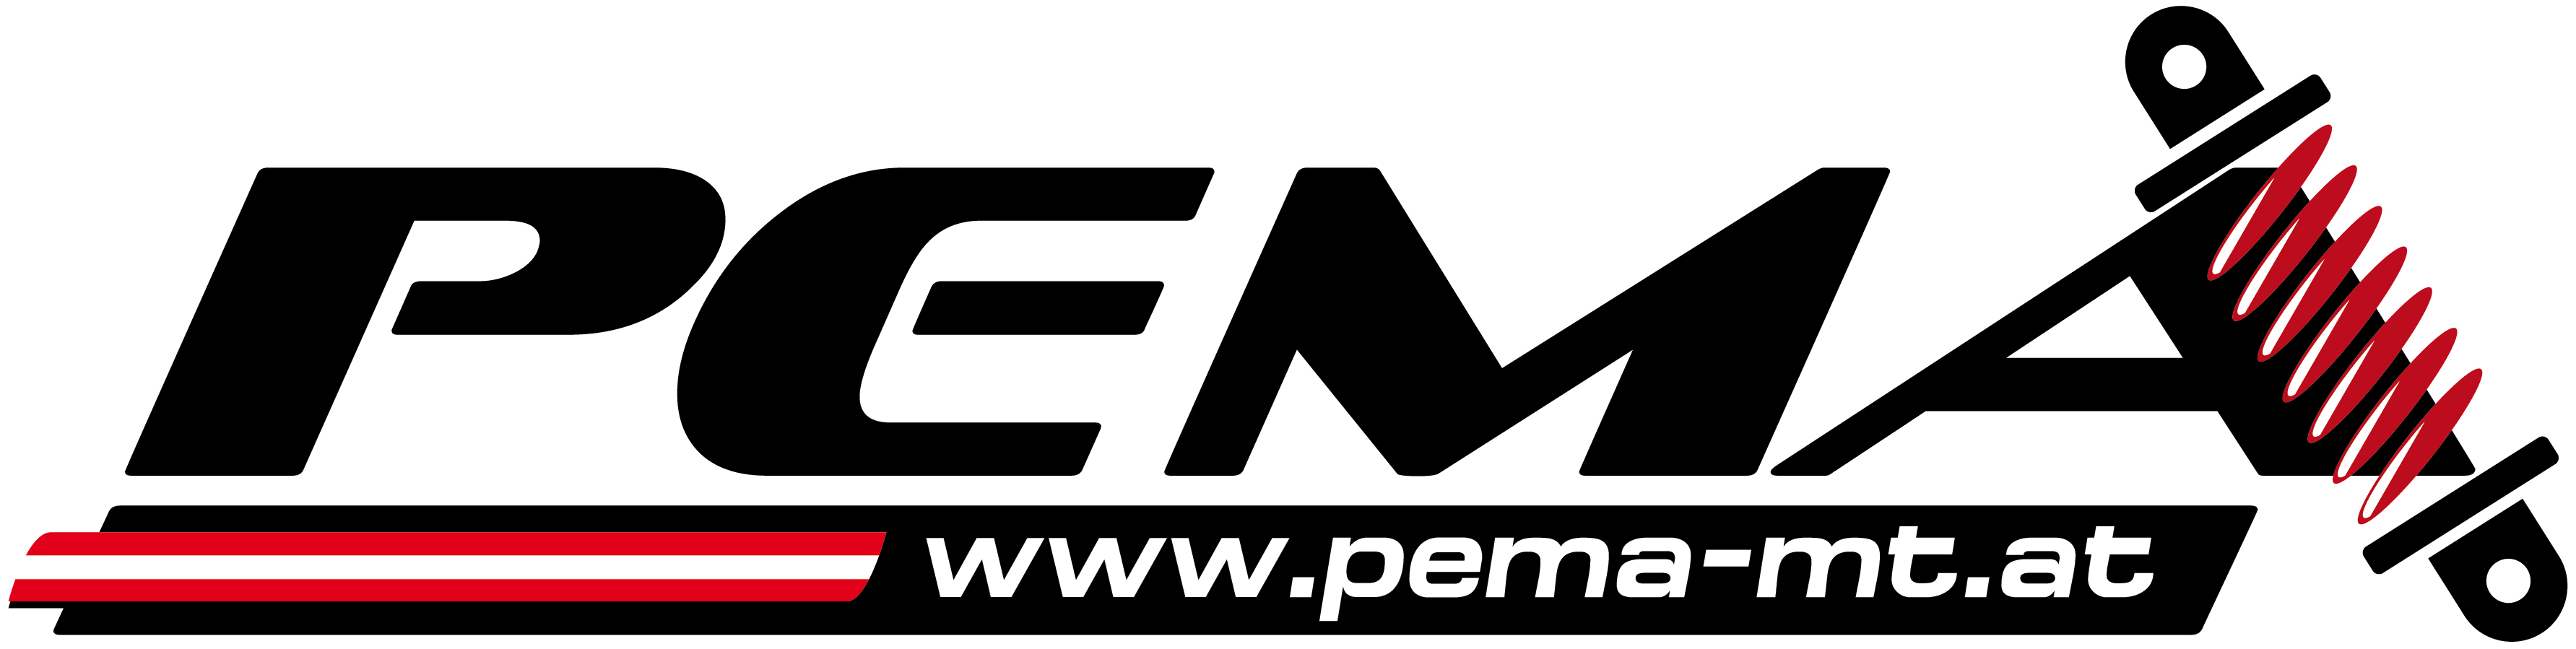 PEMA-MT Onlineshop